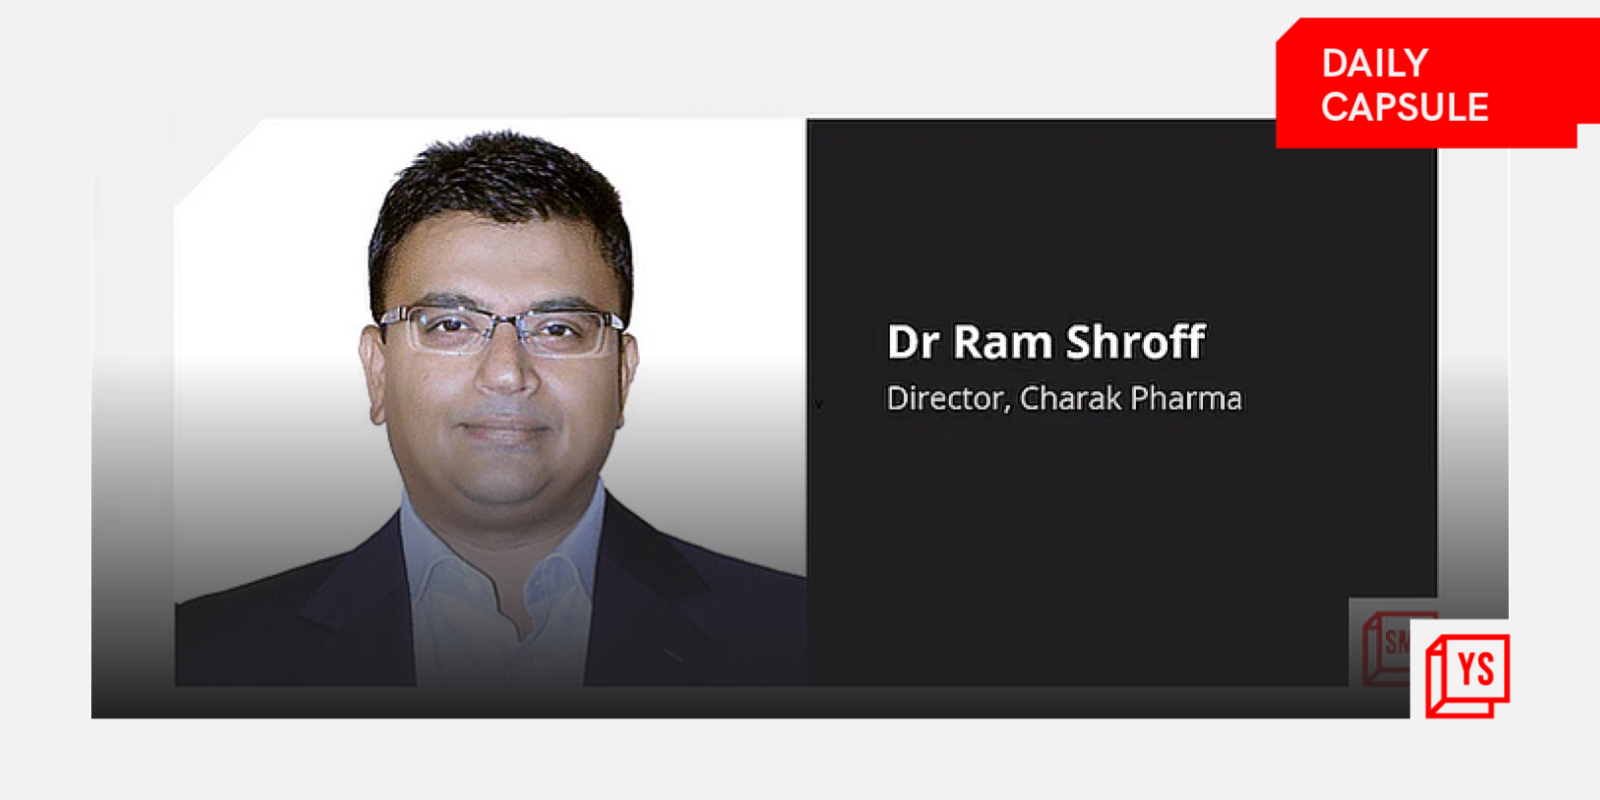 Meet Charak Pharma: A business as old as India